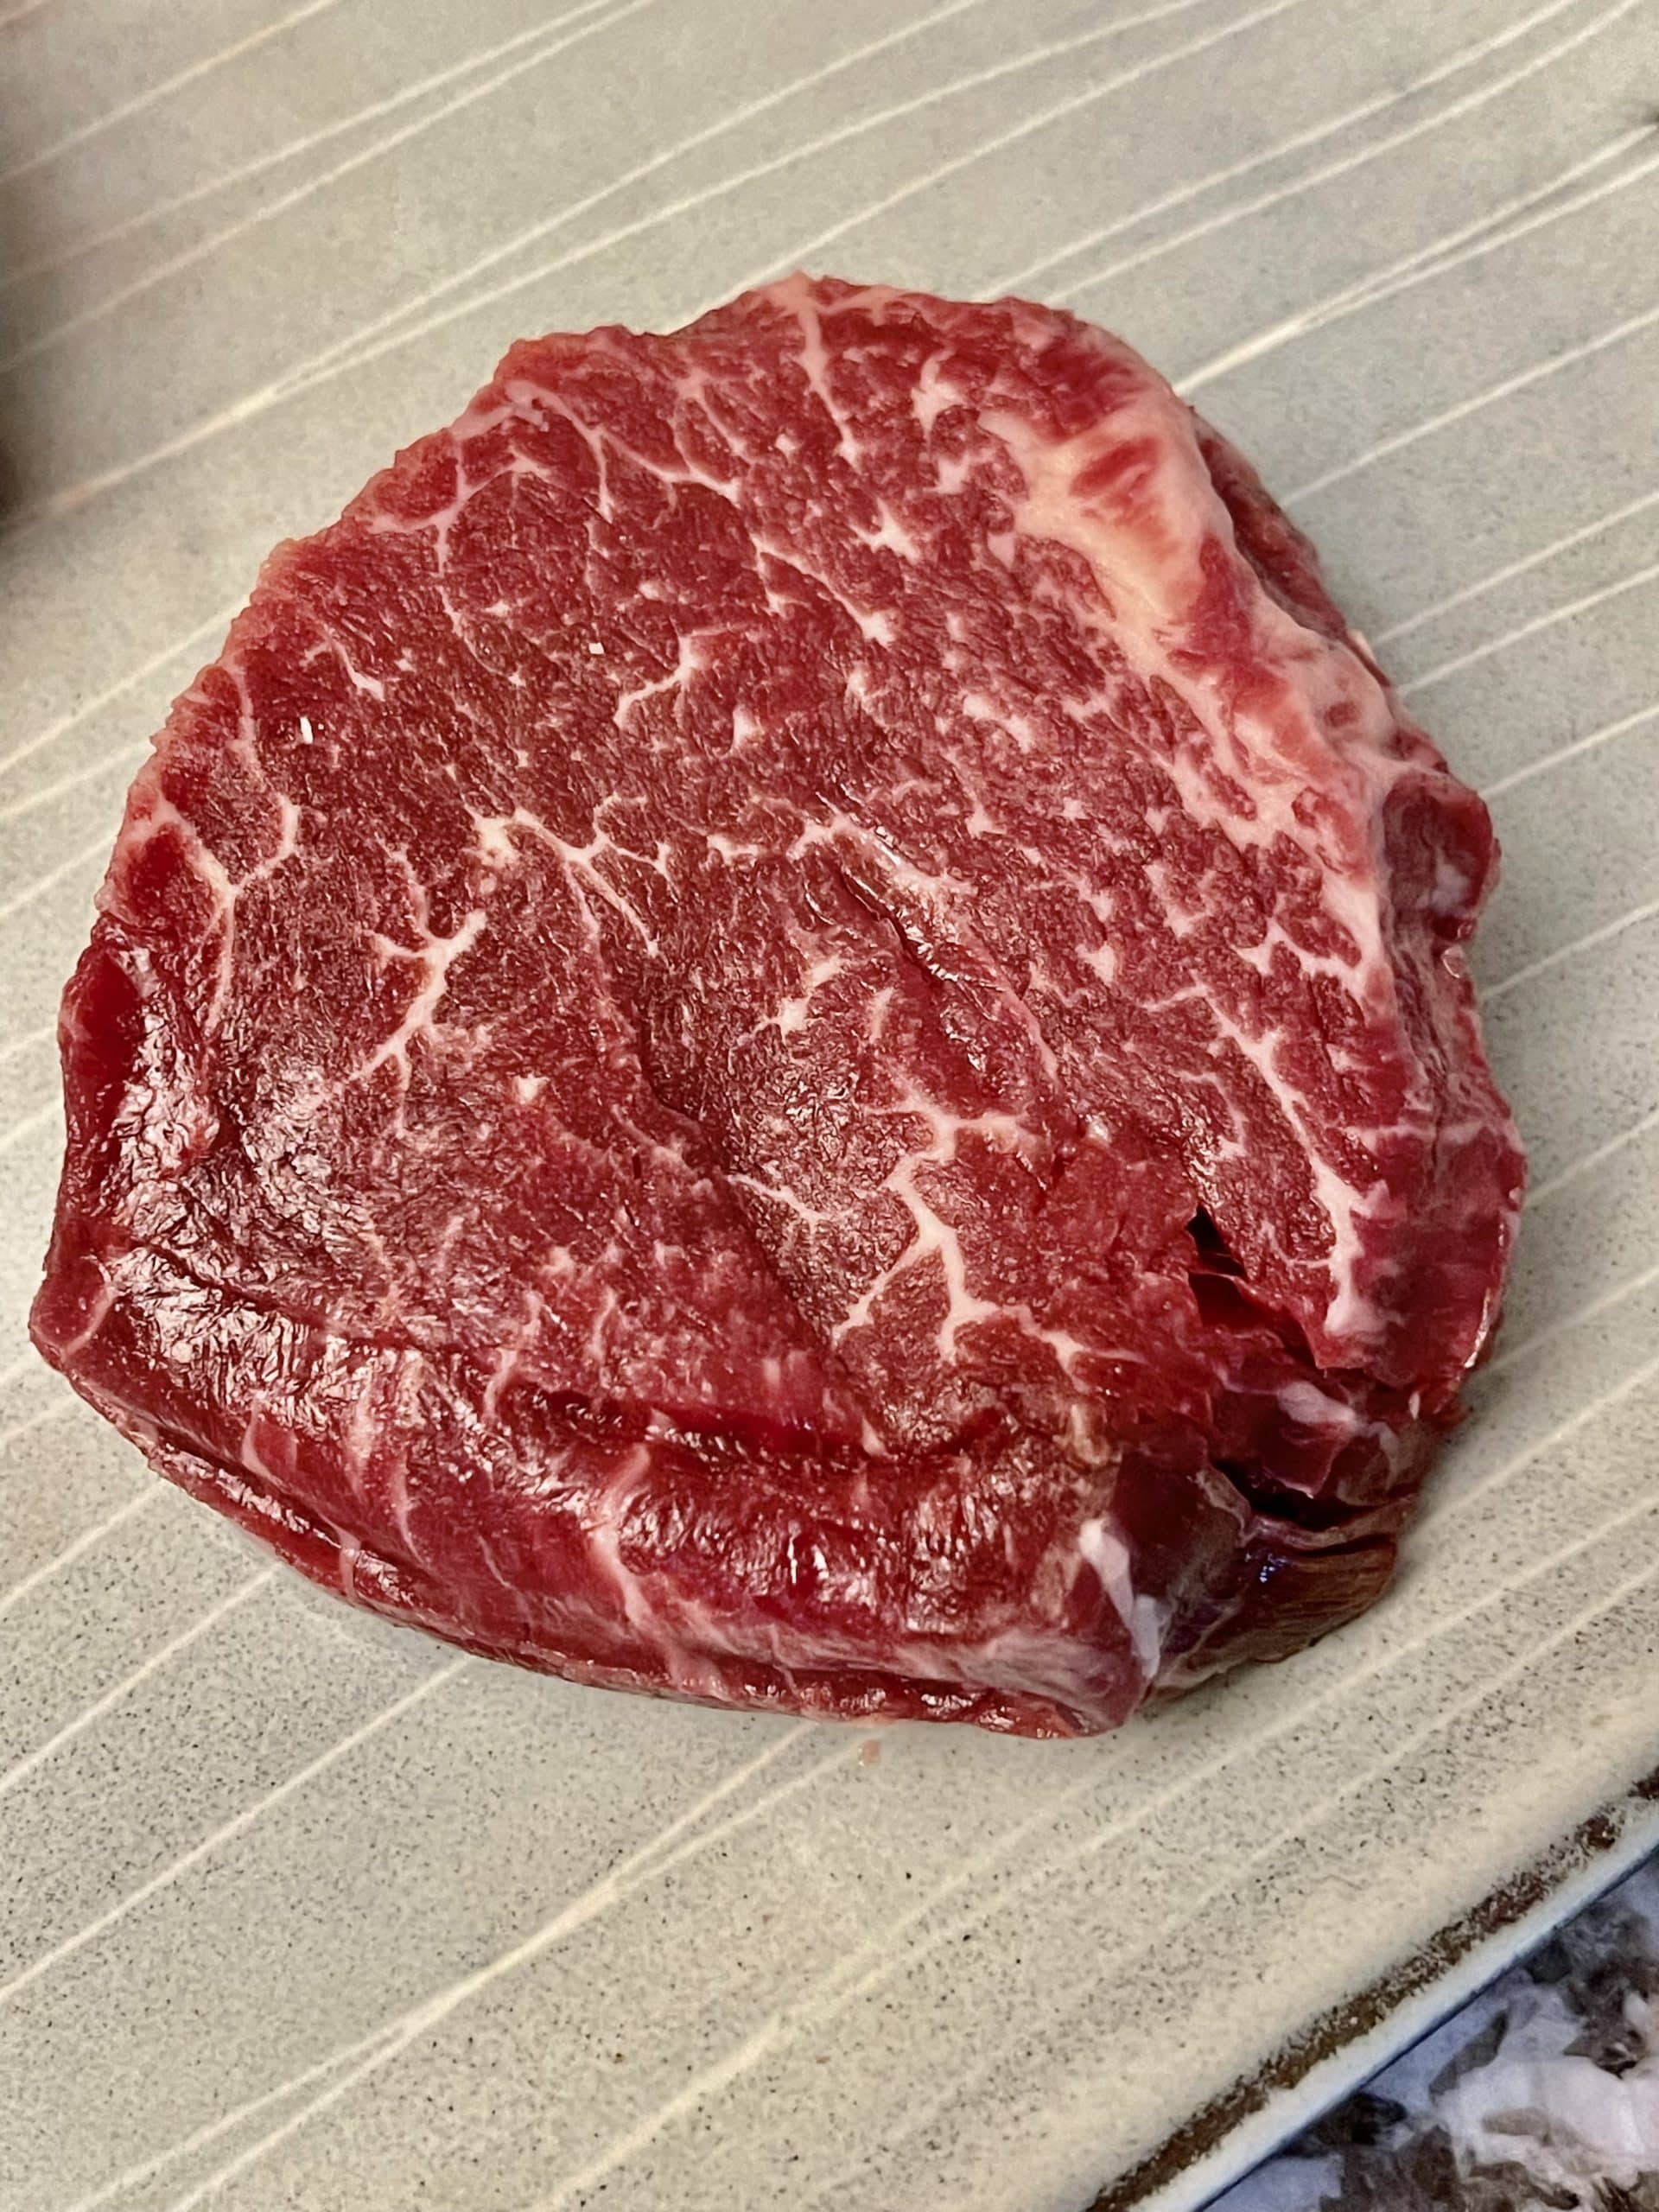 A close up of a fresh cut, Wagyu steak on butcher paper.